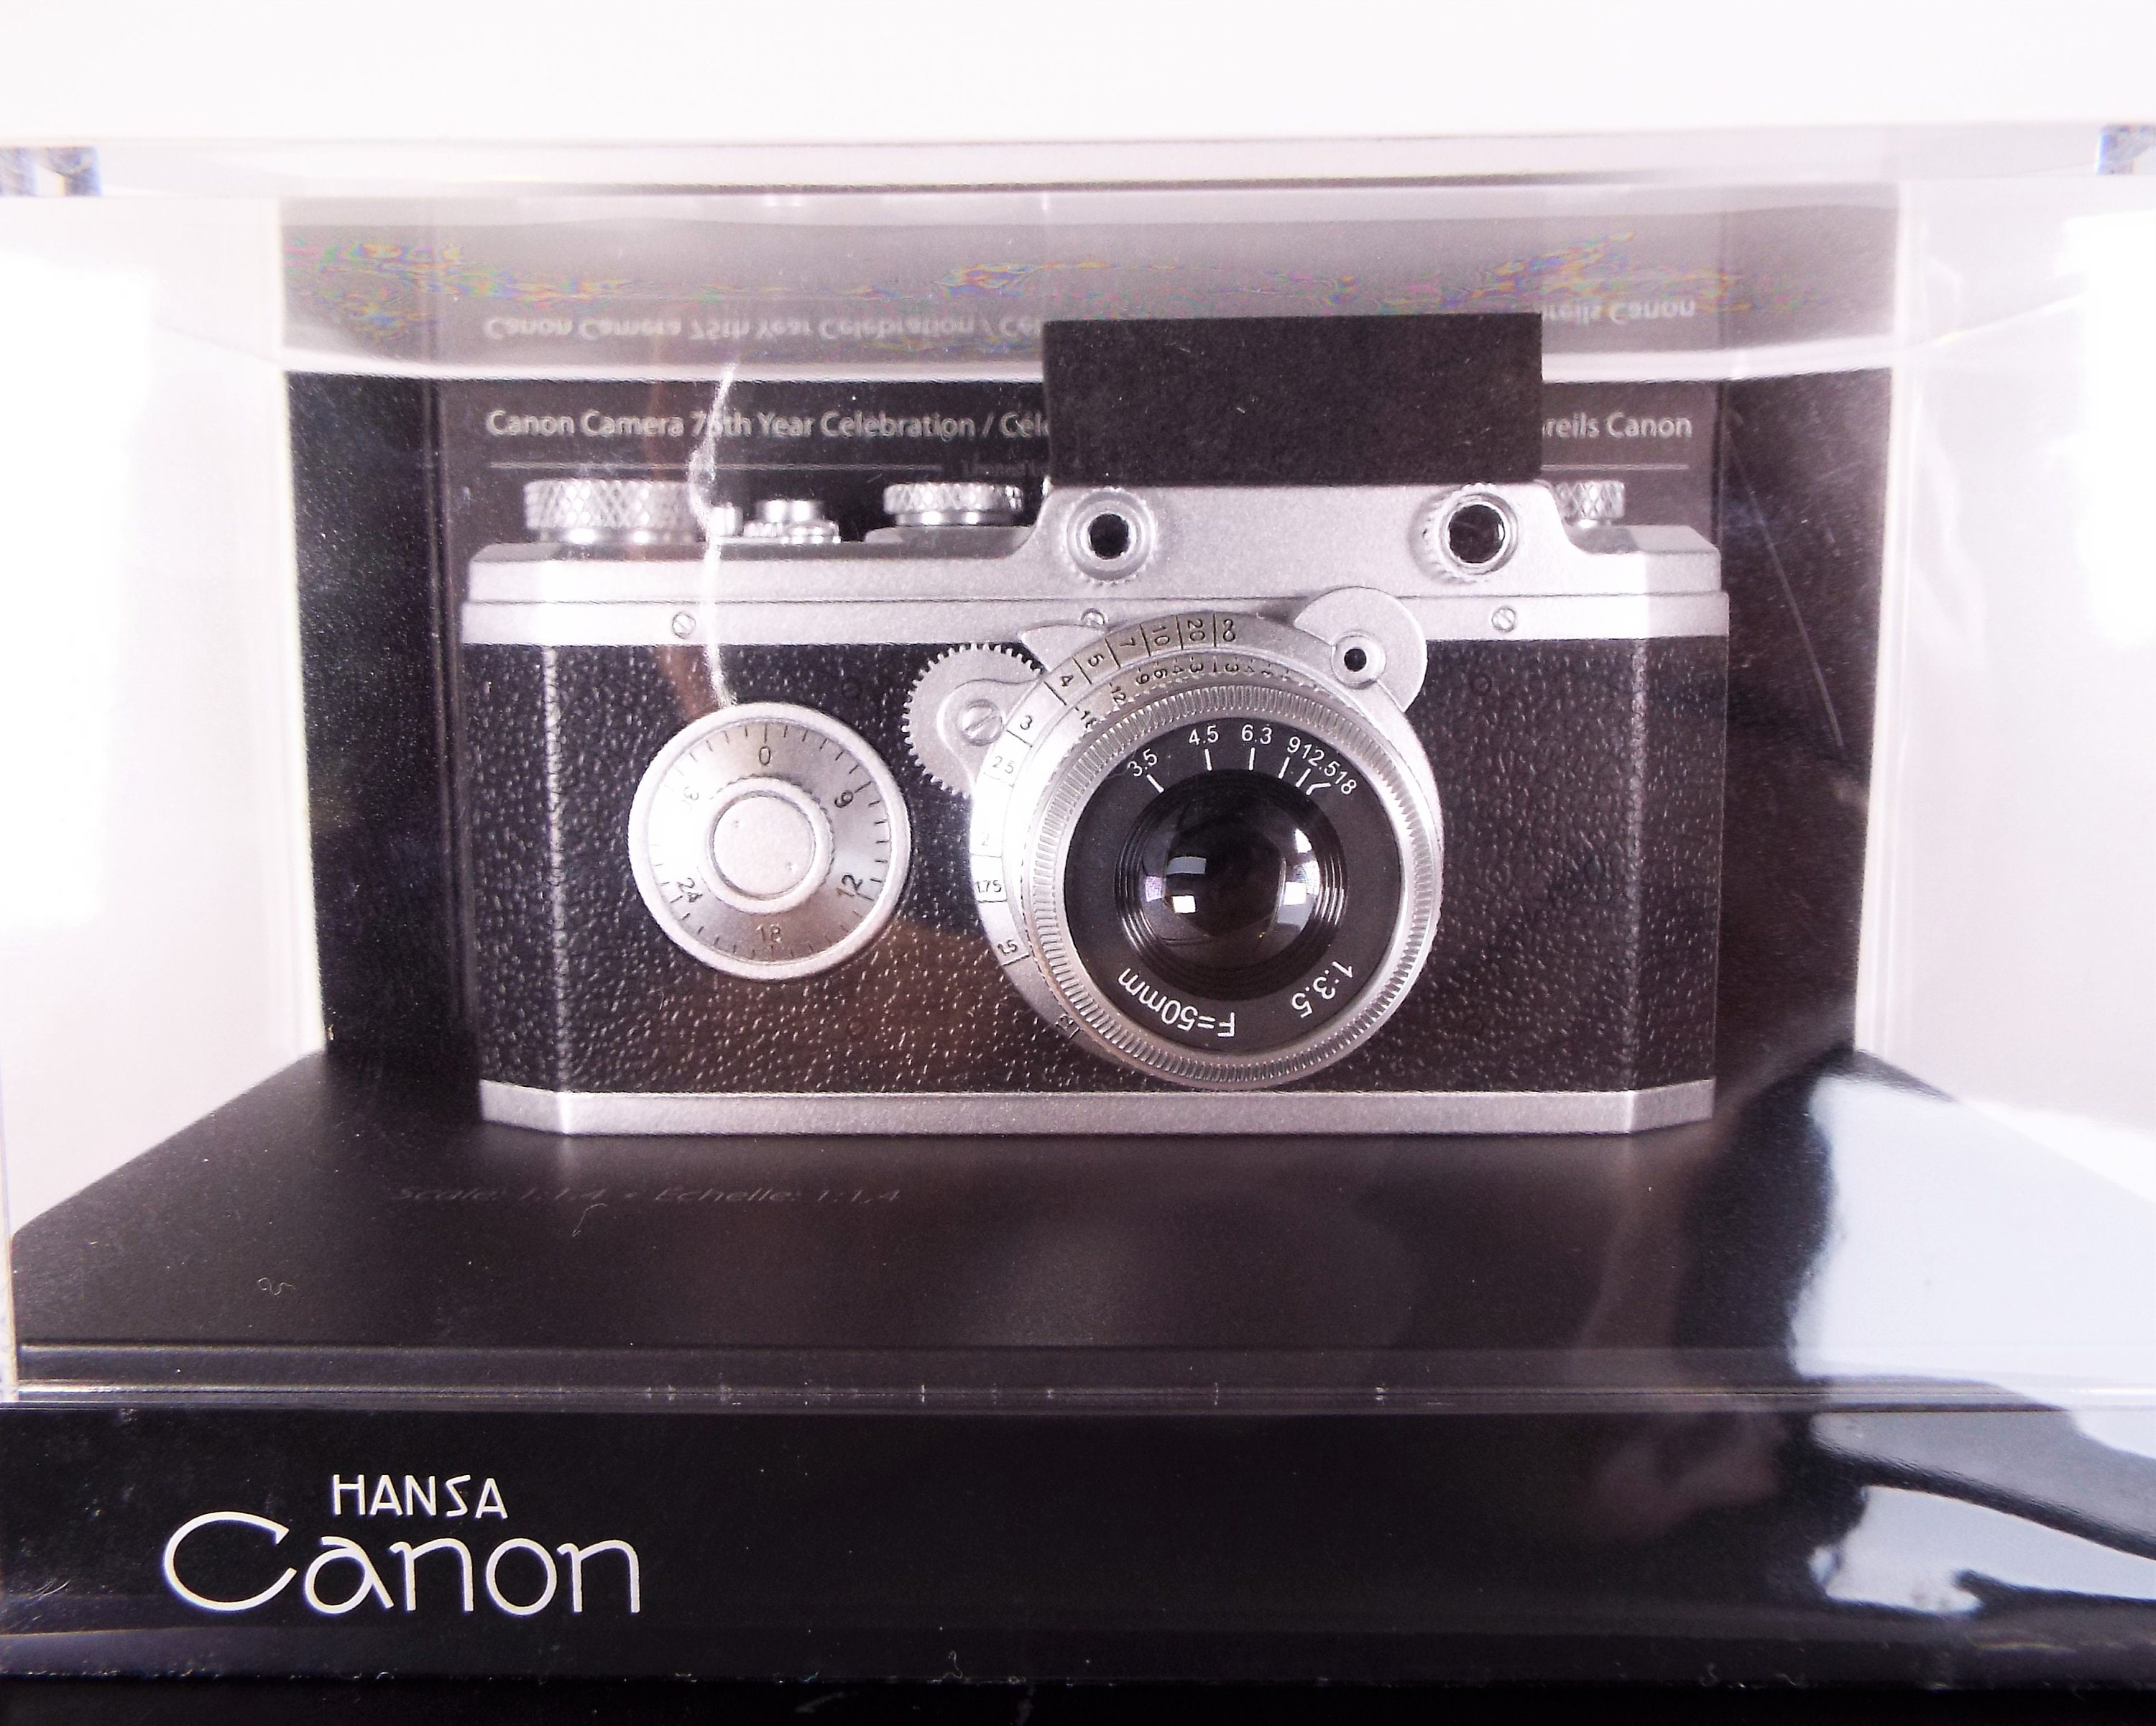 Canon Camera 75th Year Celebration Limited Edition Hansa Canon